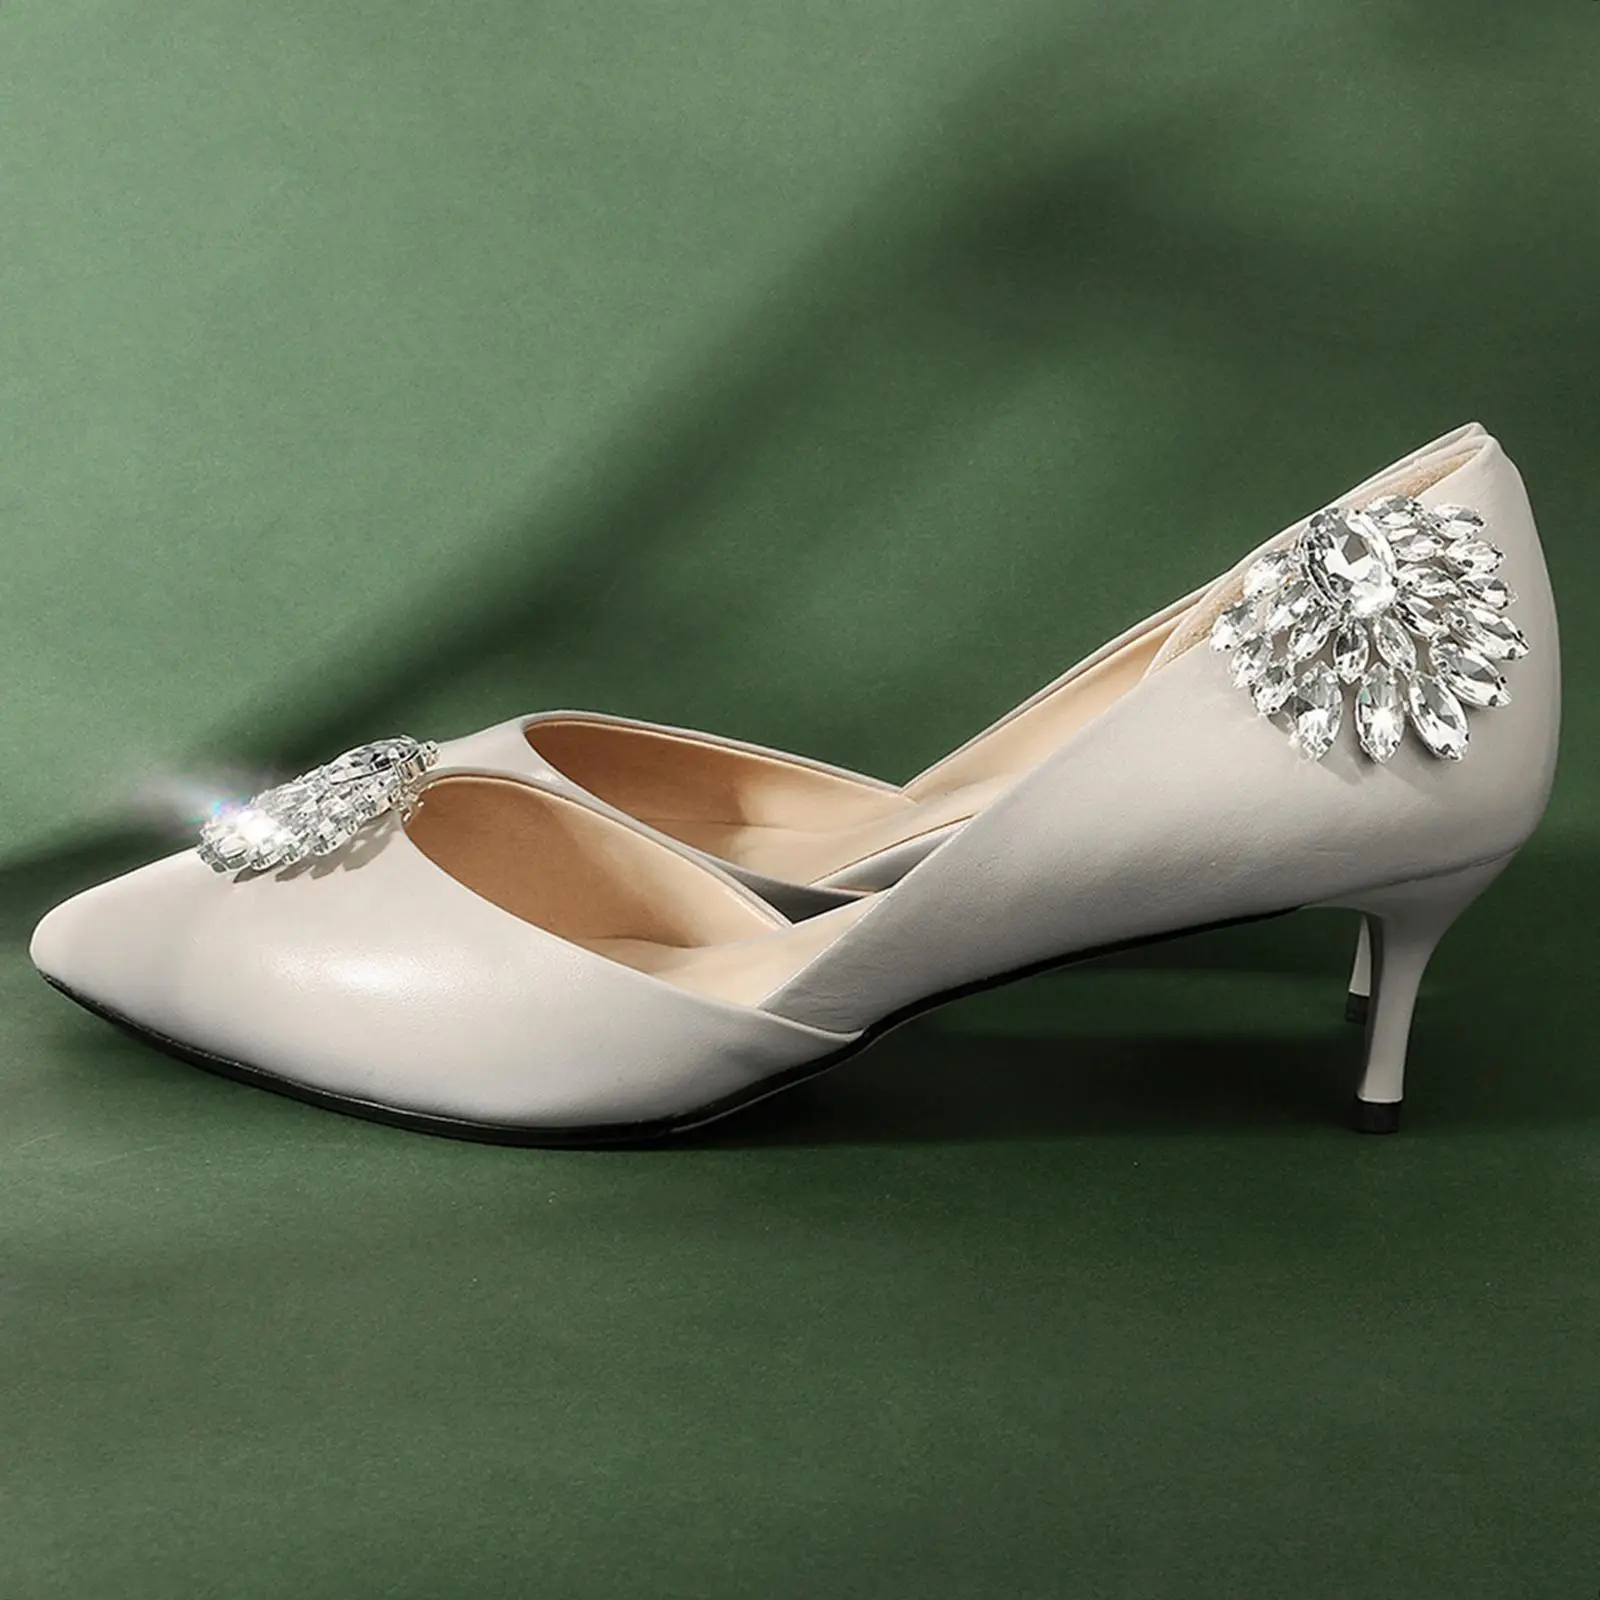 2Pcs Fashion Shoes Clips Bridal Bridal Shoes Charm Detachable High Heel Shoes Clip Garment Accessories DIY for Wedding